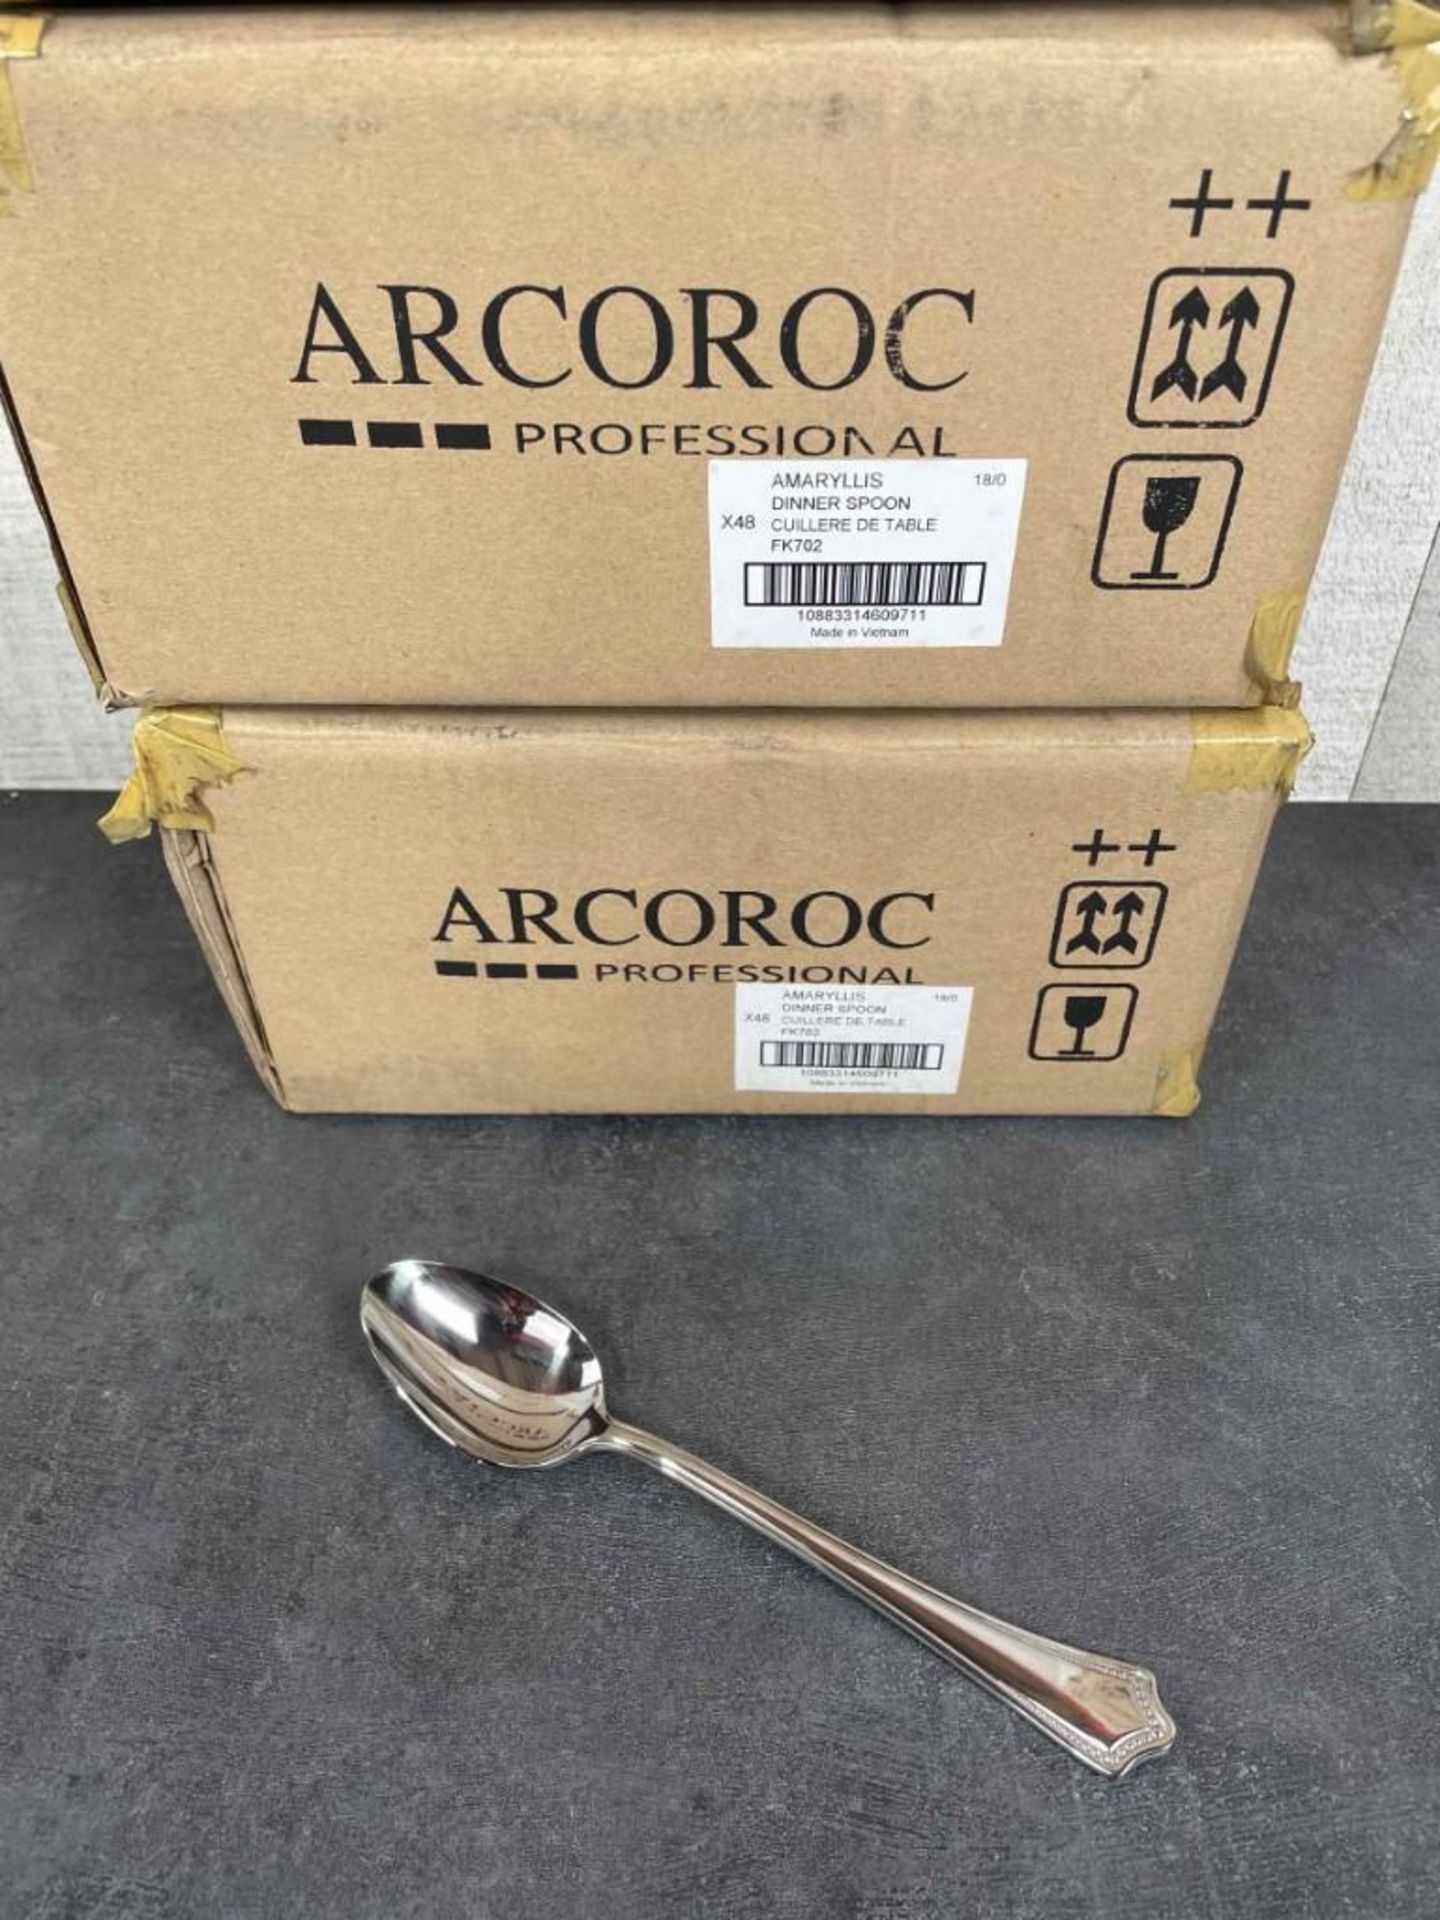 ARCOROC AMARYLLIS DINNER SPOONS - LOT OF 144